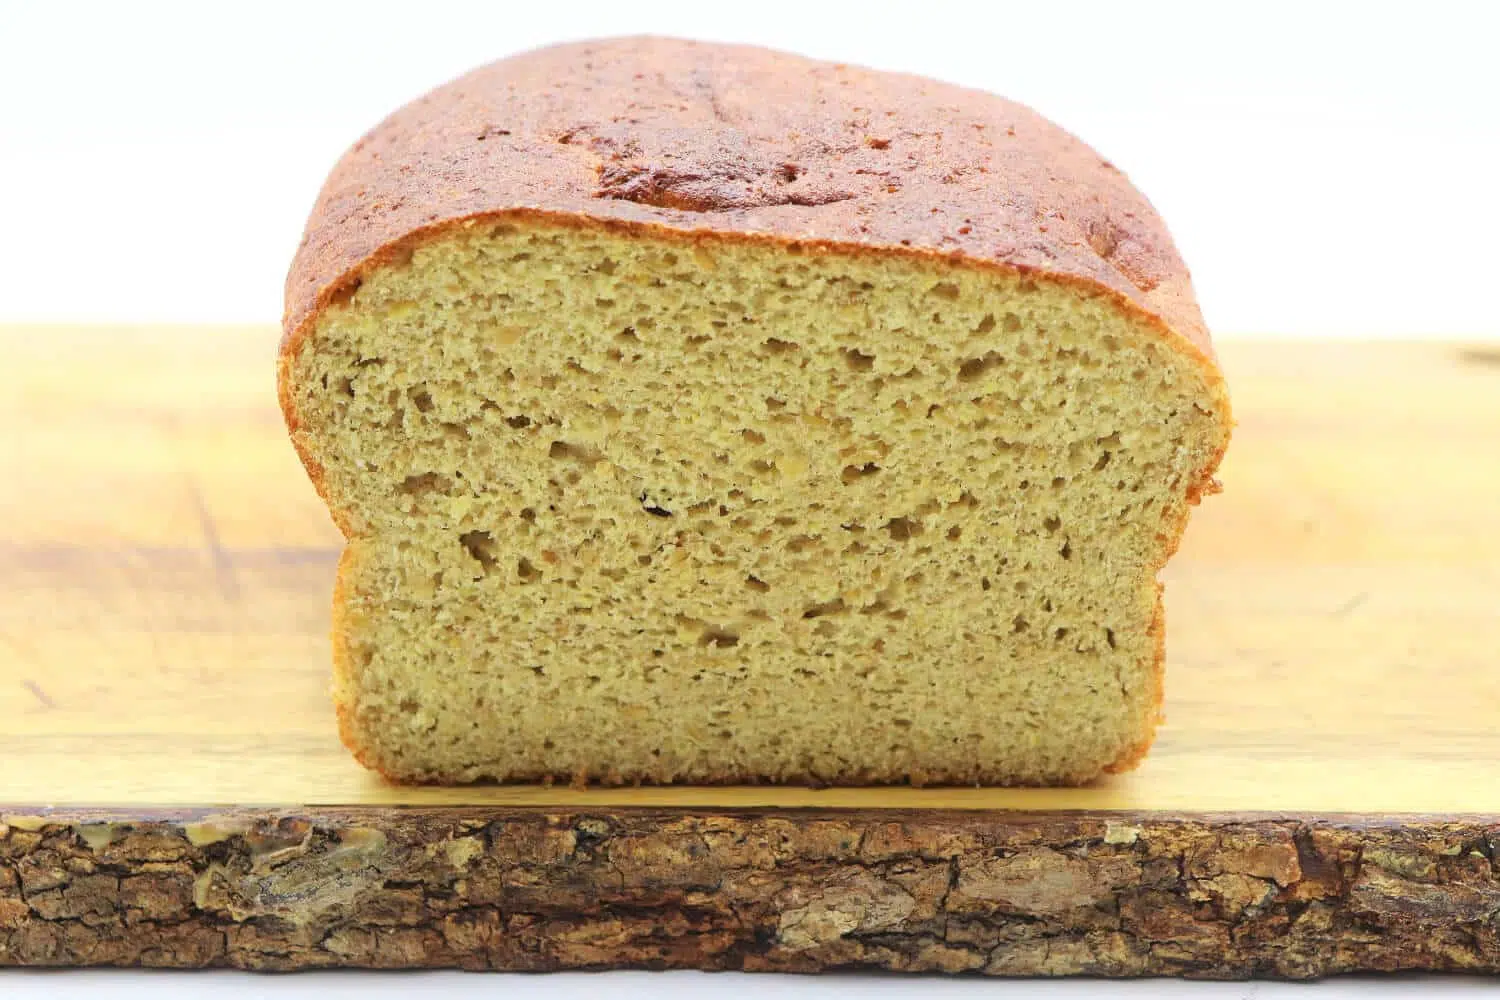 Brot ohne Kohlenhydrate selber machen